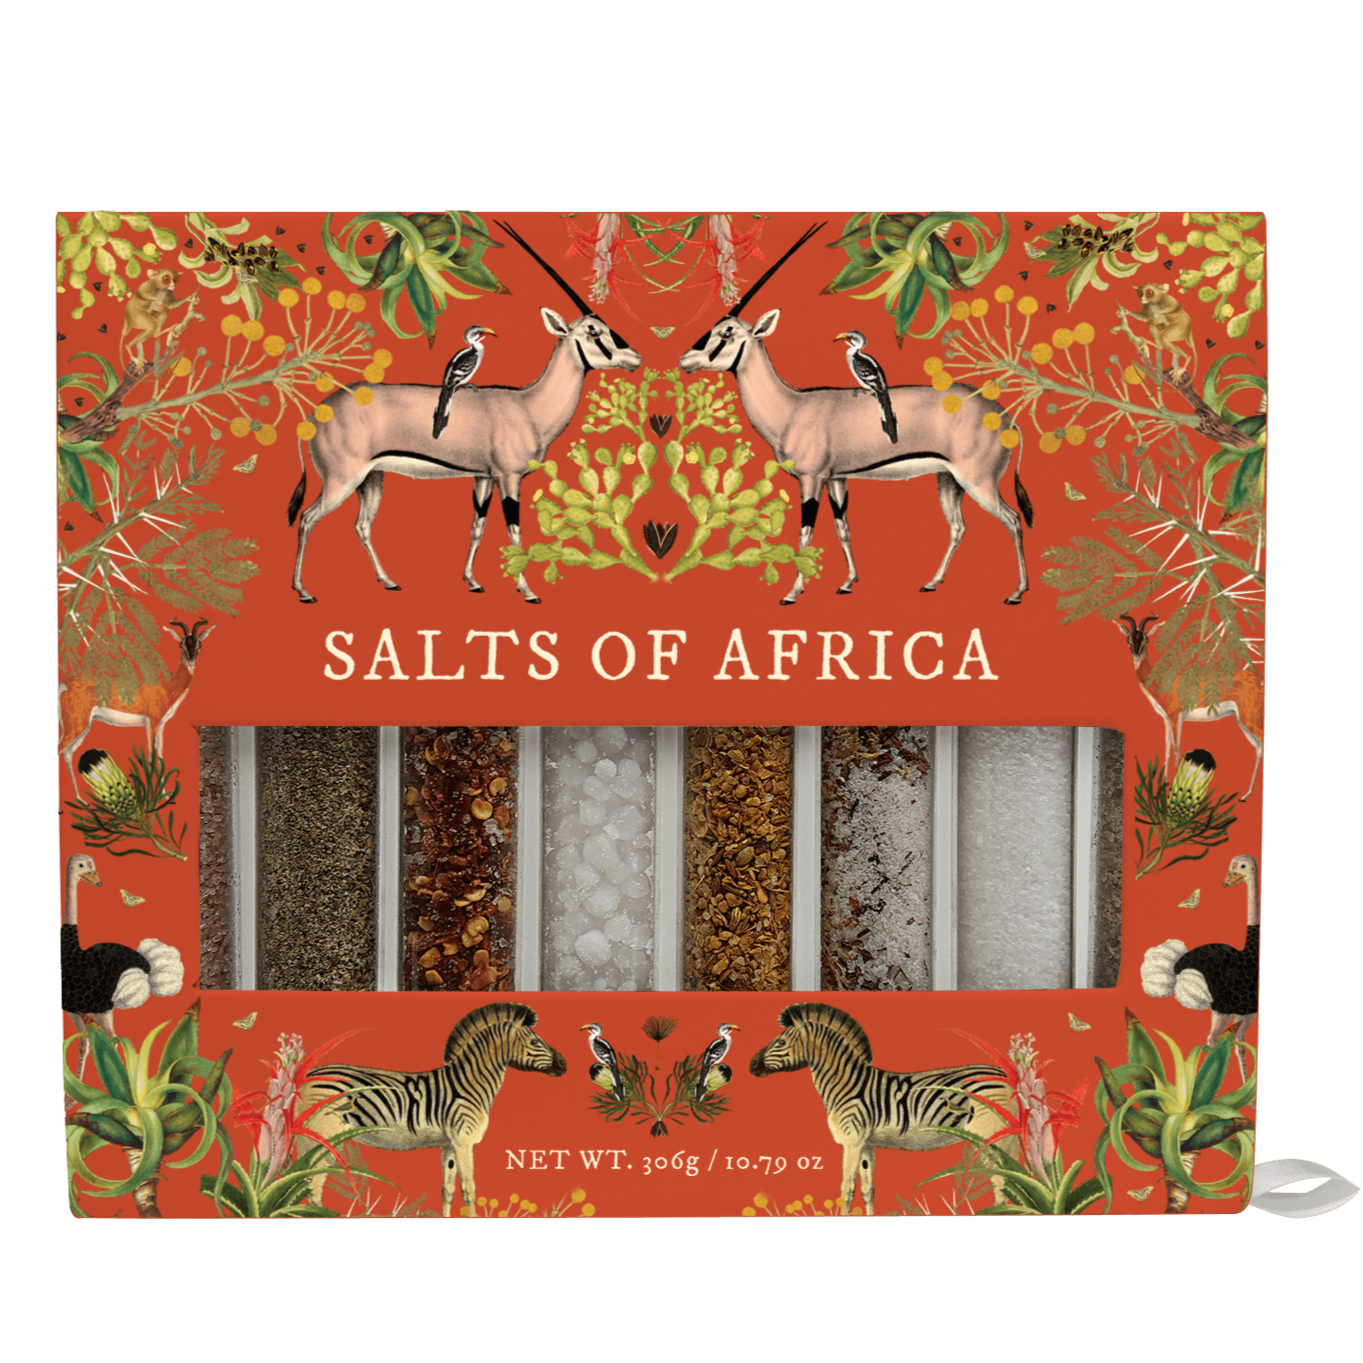 African Salt Set: Salts of Africa Gift Box Set